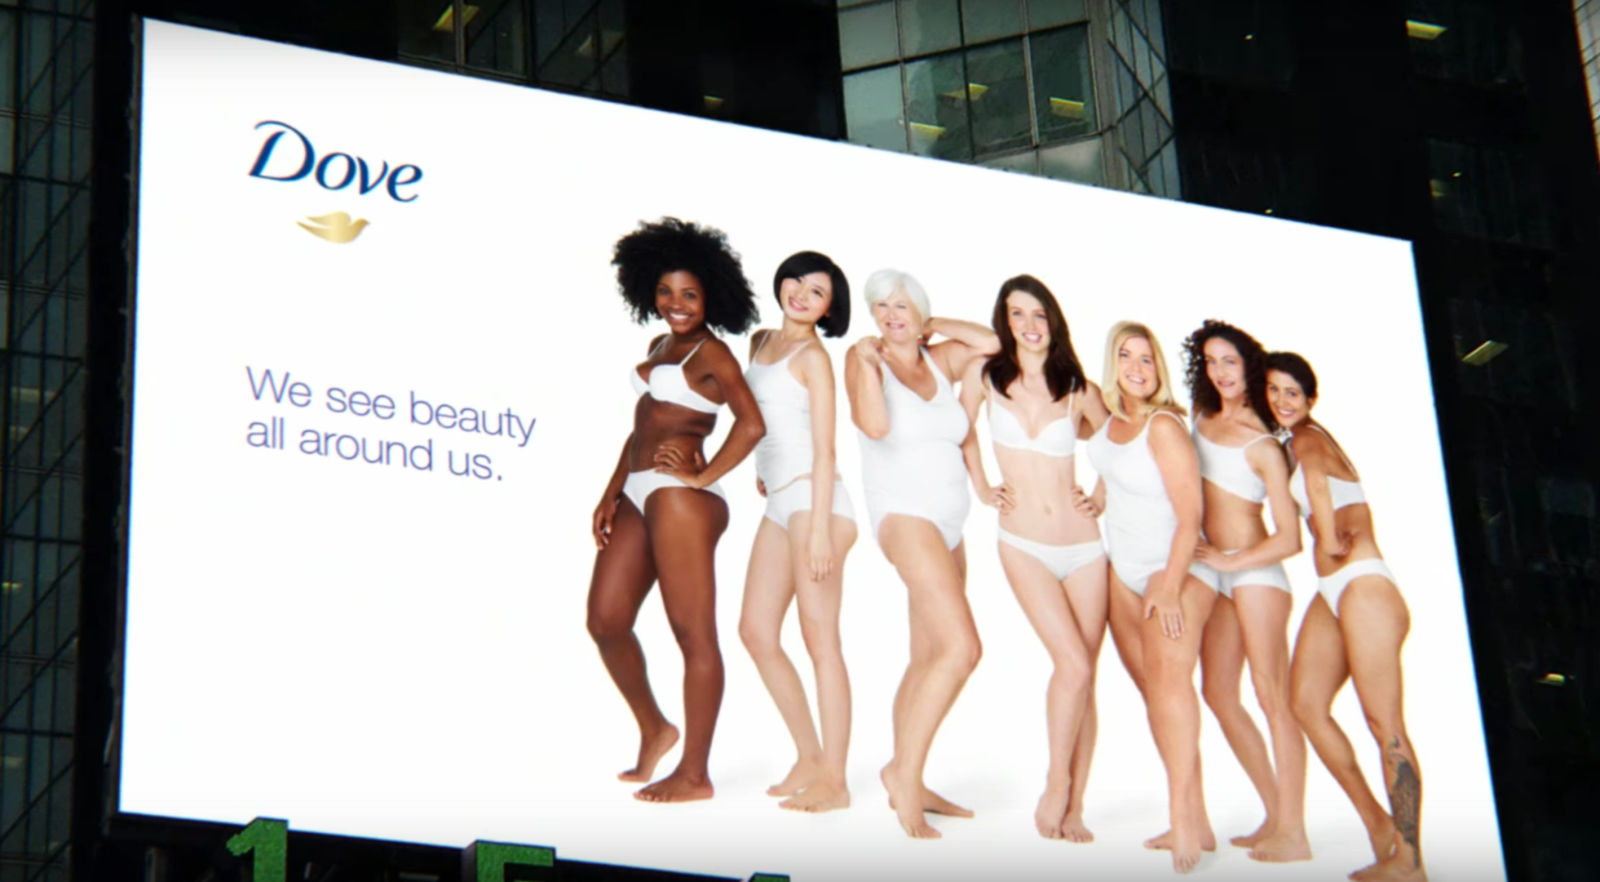 Dove's "Real Beauty" campaign billboard